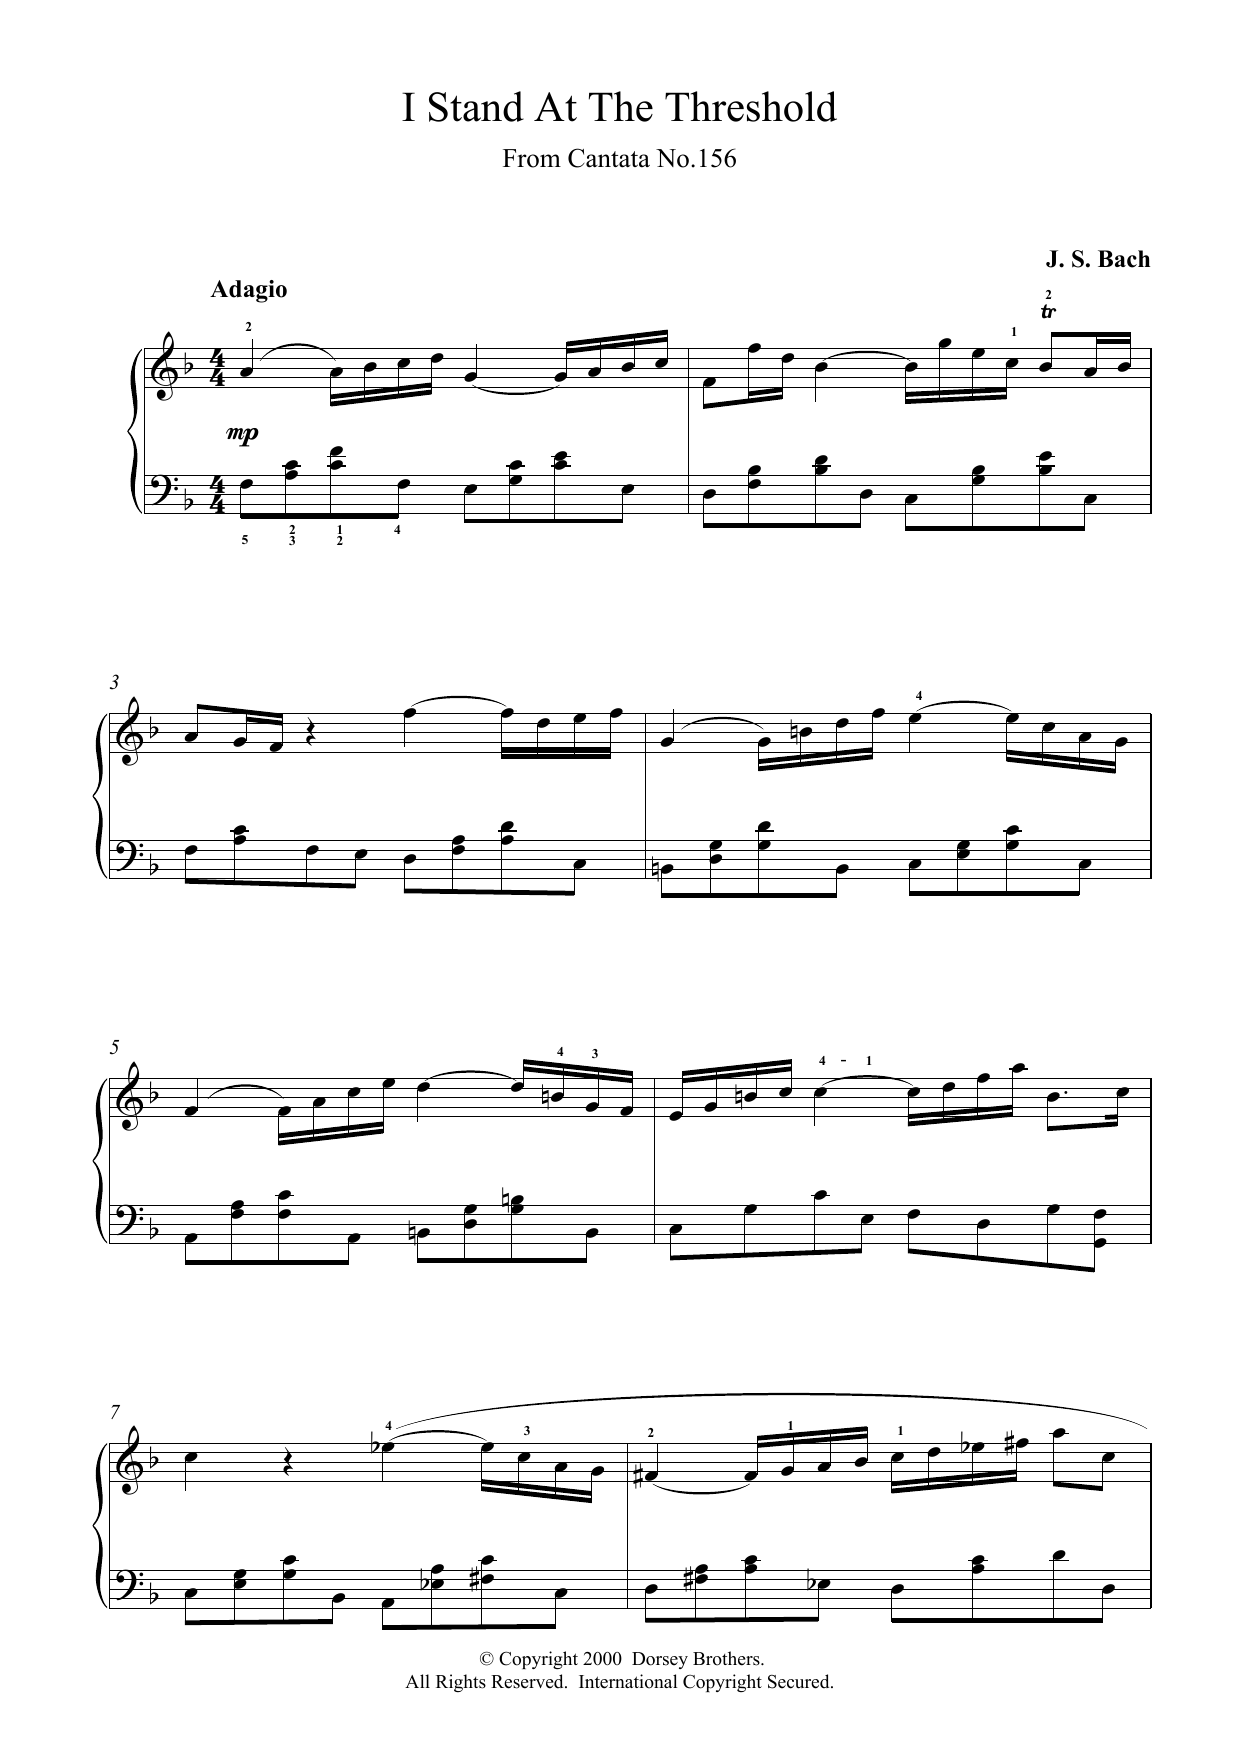 Johann Sebastian Bach I Stand At The Threshold Sheet Music Notes & Chords for Piano - Download or Print PDF